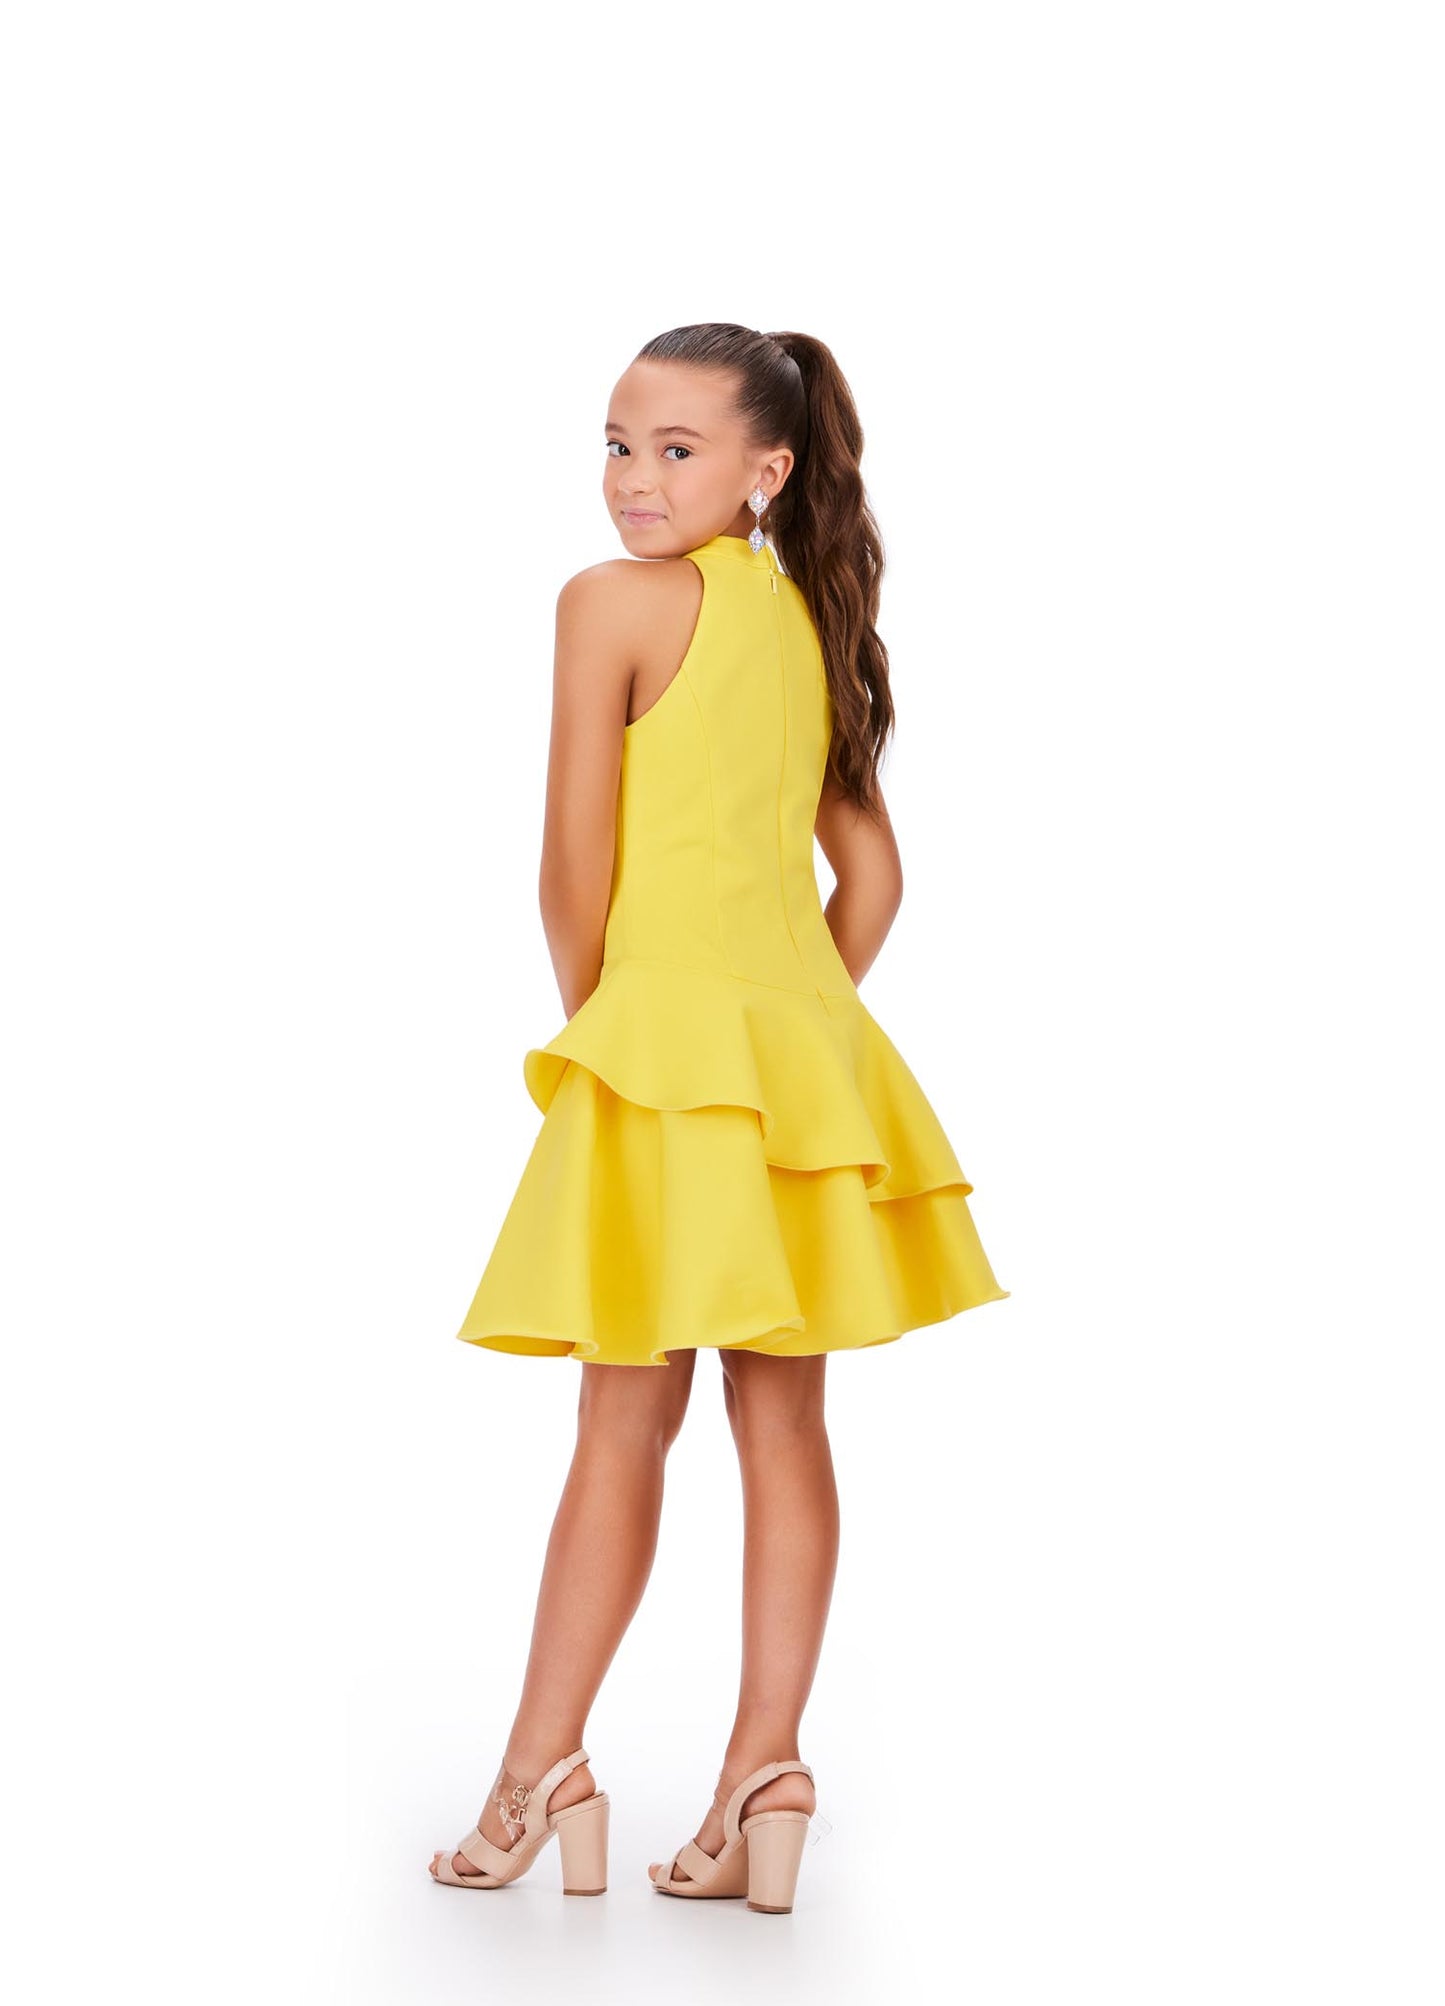 Ashley Lauren Kids 8204 Girls Yellow Cocktail Dress with Asymmetrical Tiered Skirt and high neckline 